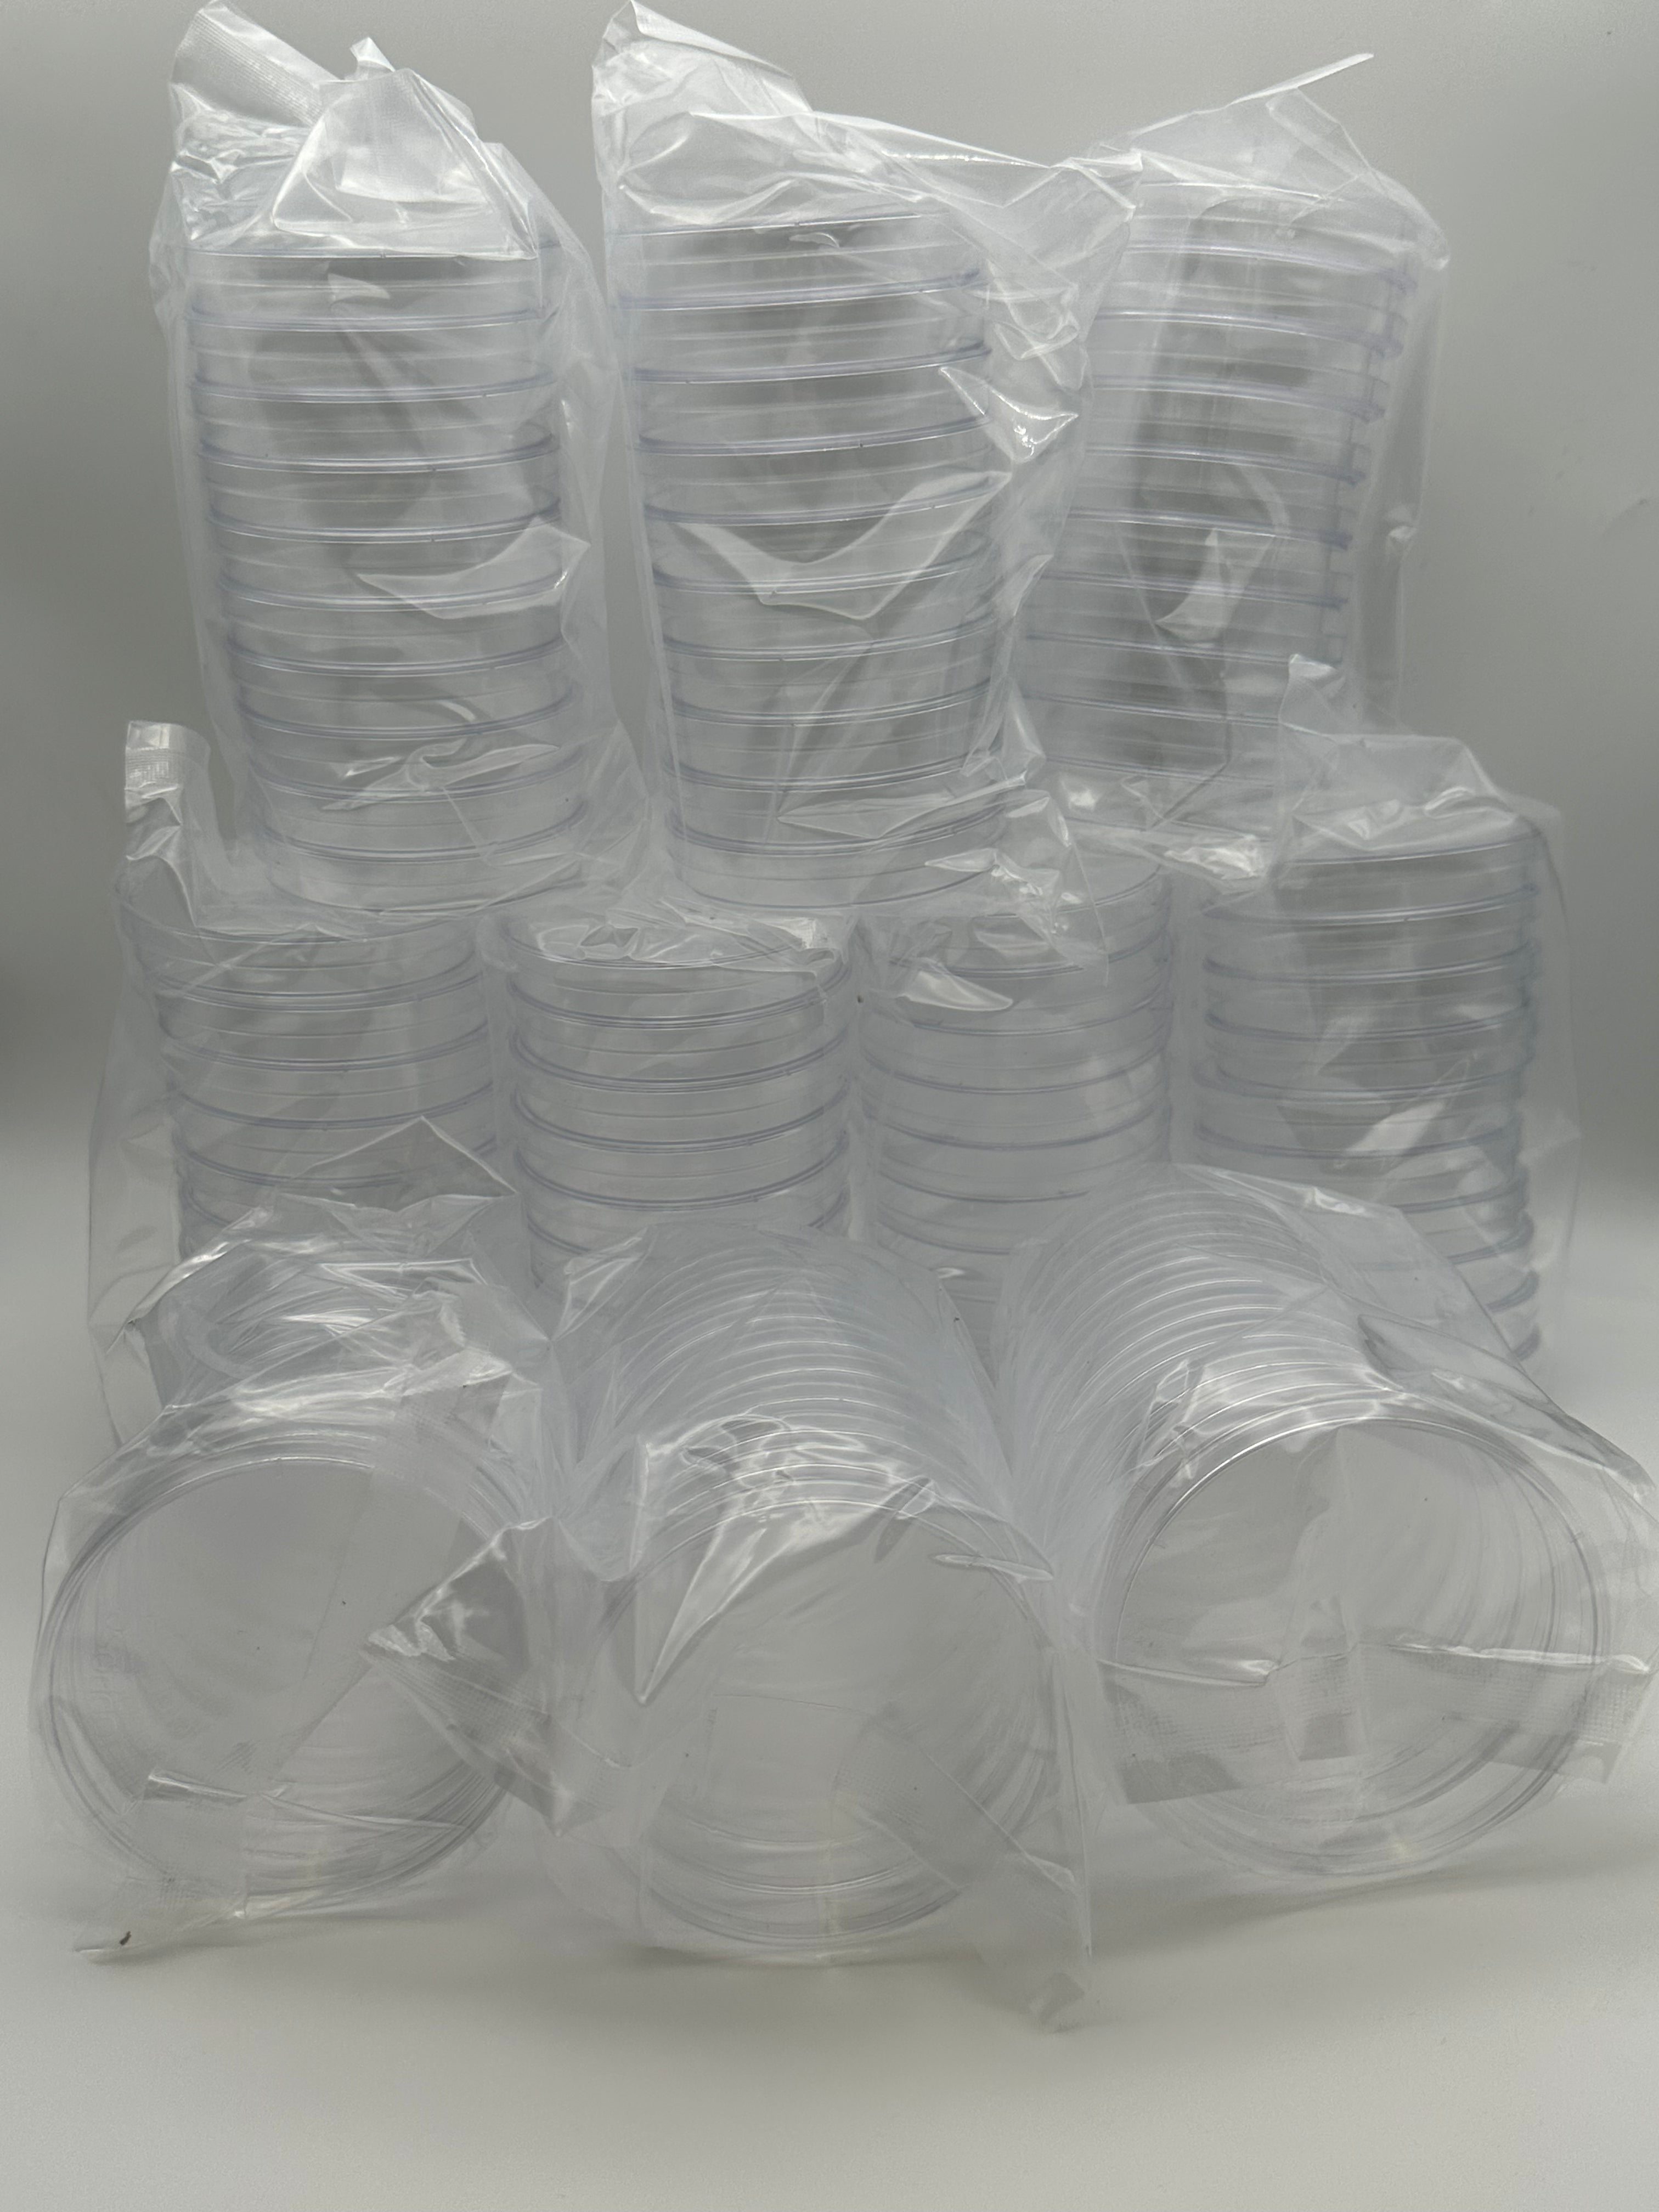 Standard/Disposable 90mm*15mm Polystyrene Petri Dish - Free Shipping